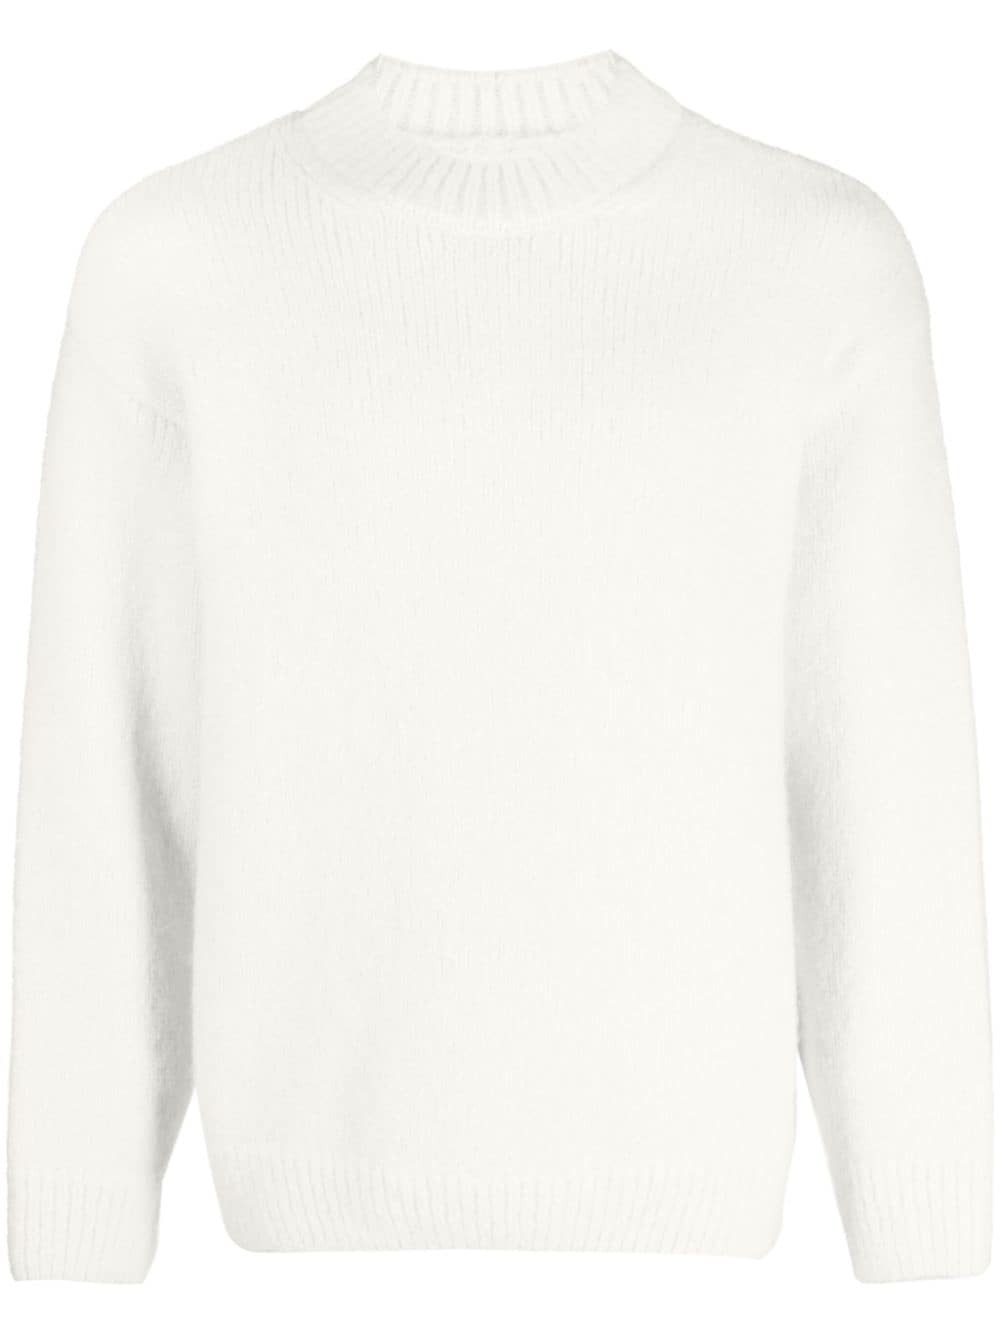 La Maille Pavane Jacquard Sweater